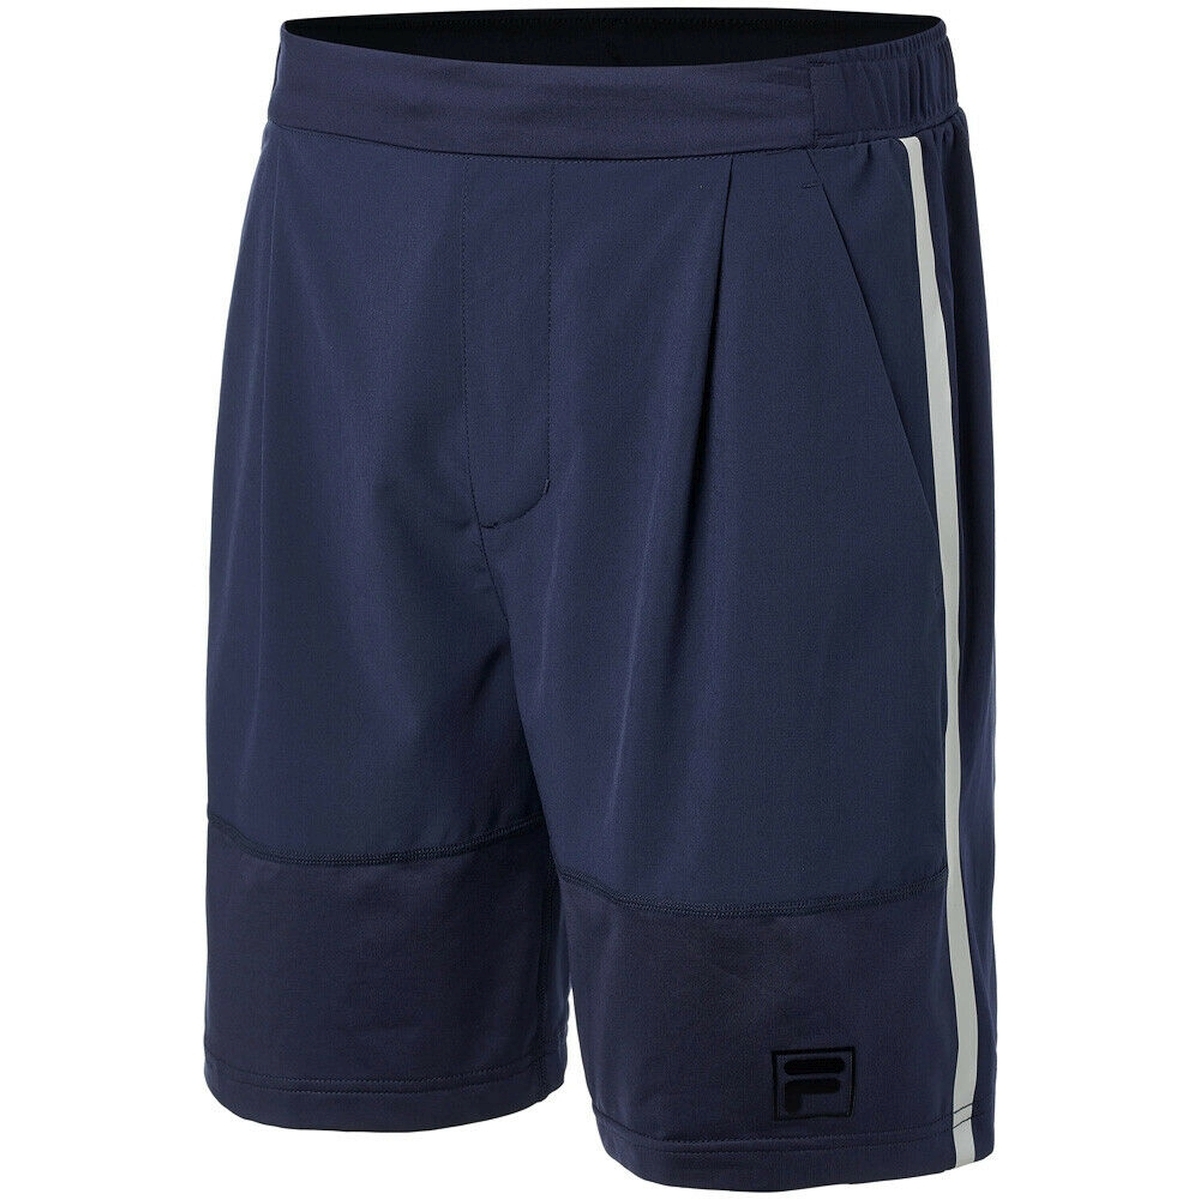 Fila Men's Tie Breaker Tennis Shorts (Navy/Glacier Gray)